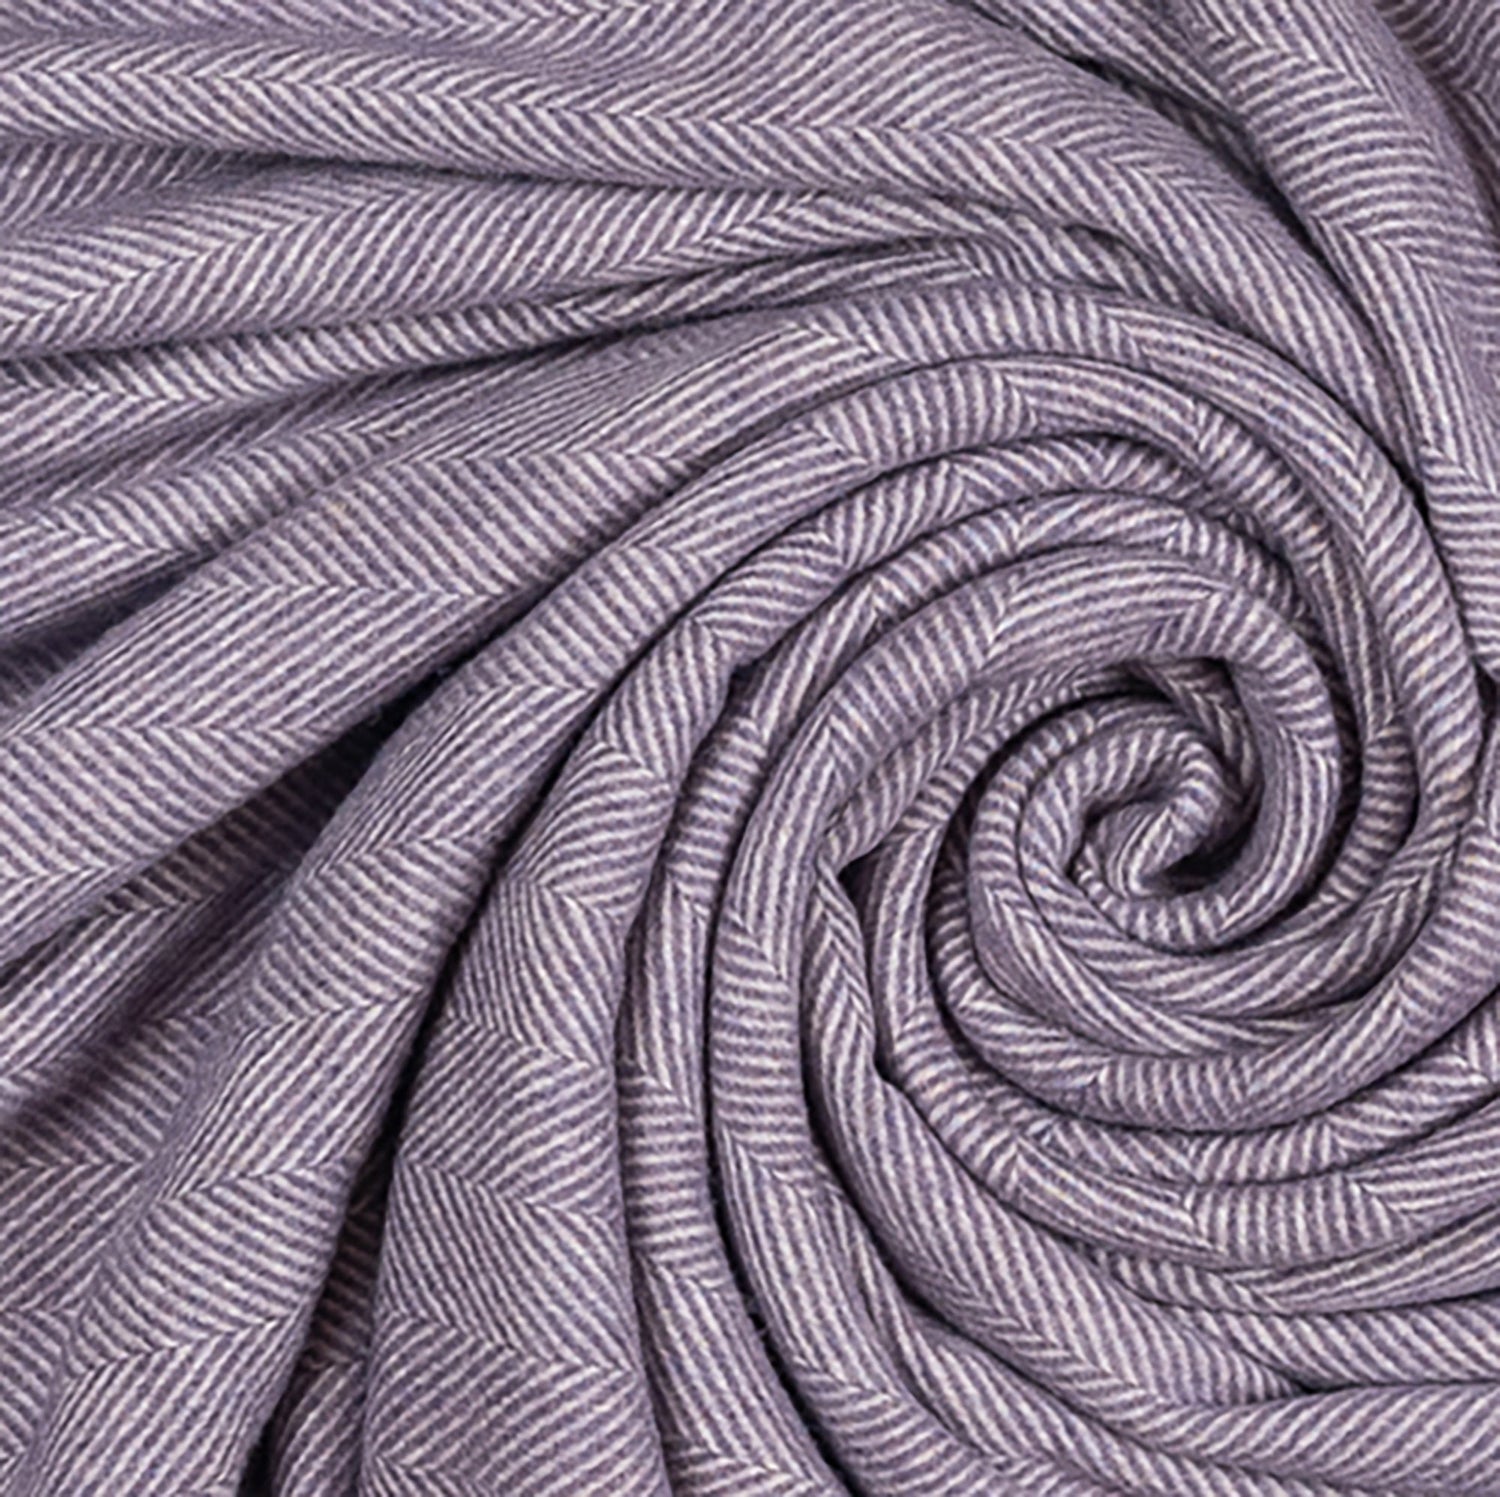 Southampton Home Merino Wool Herringbone Throw (Lavender)-Throws and Blankets-Q0290011-Prince of Scots